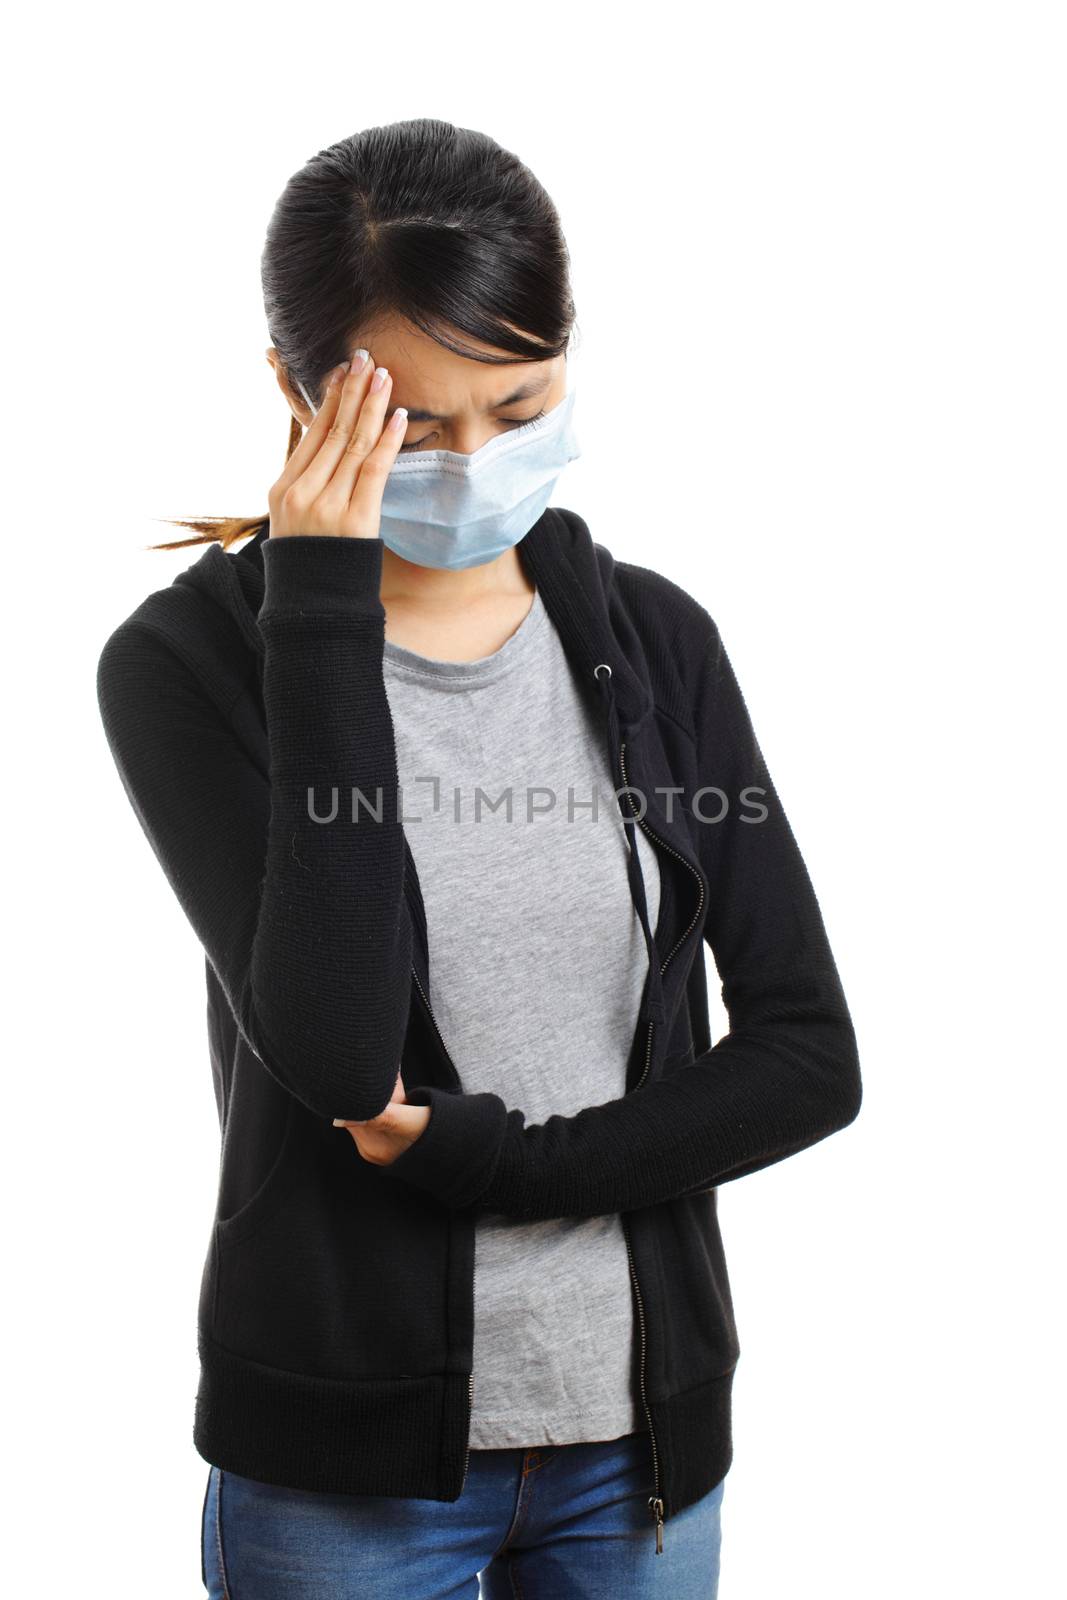 Sickness asian woman by leungchopan